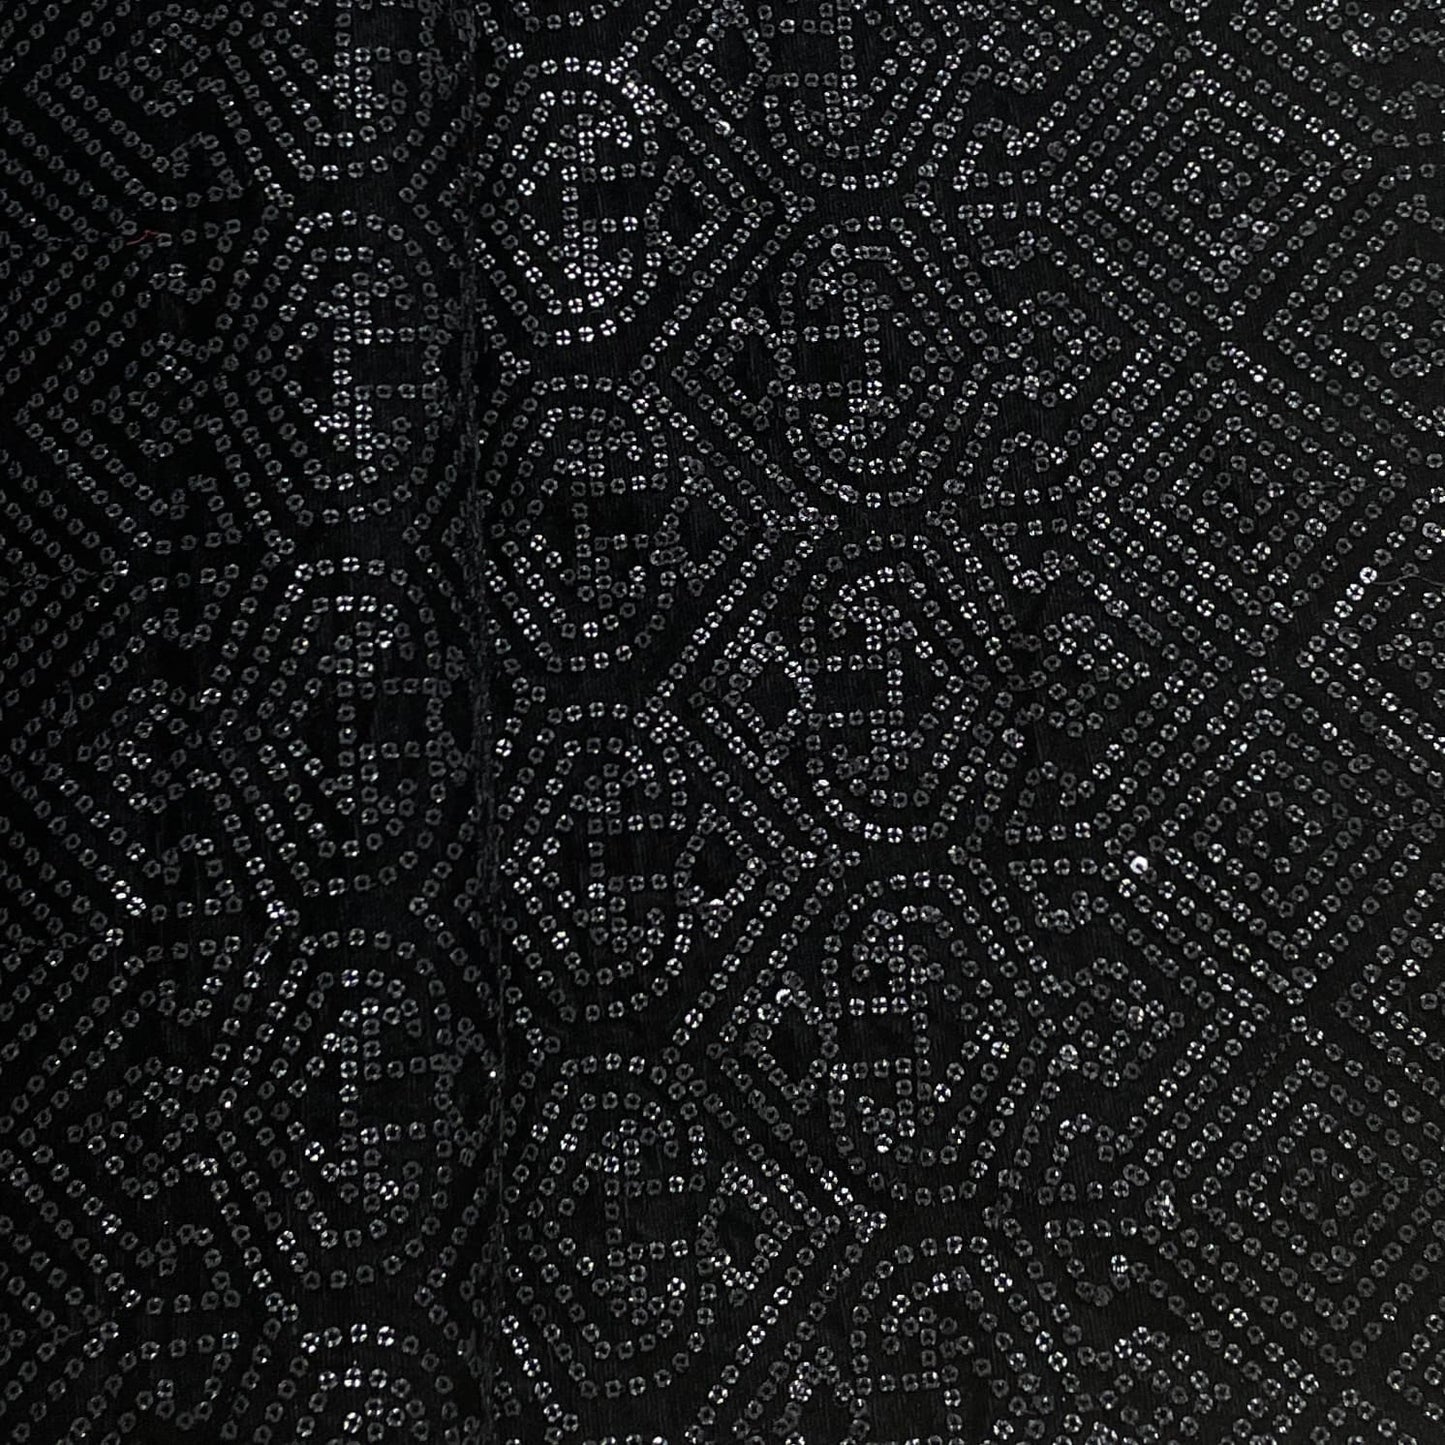 Premium Black Sequence Embroidery Velvet Fabric